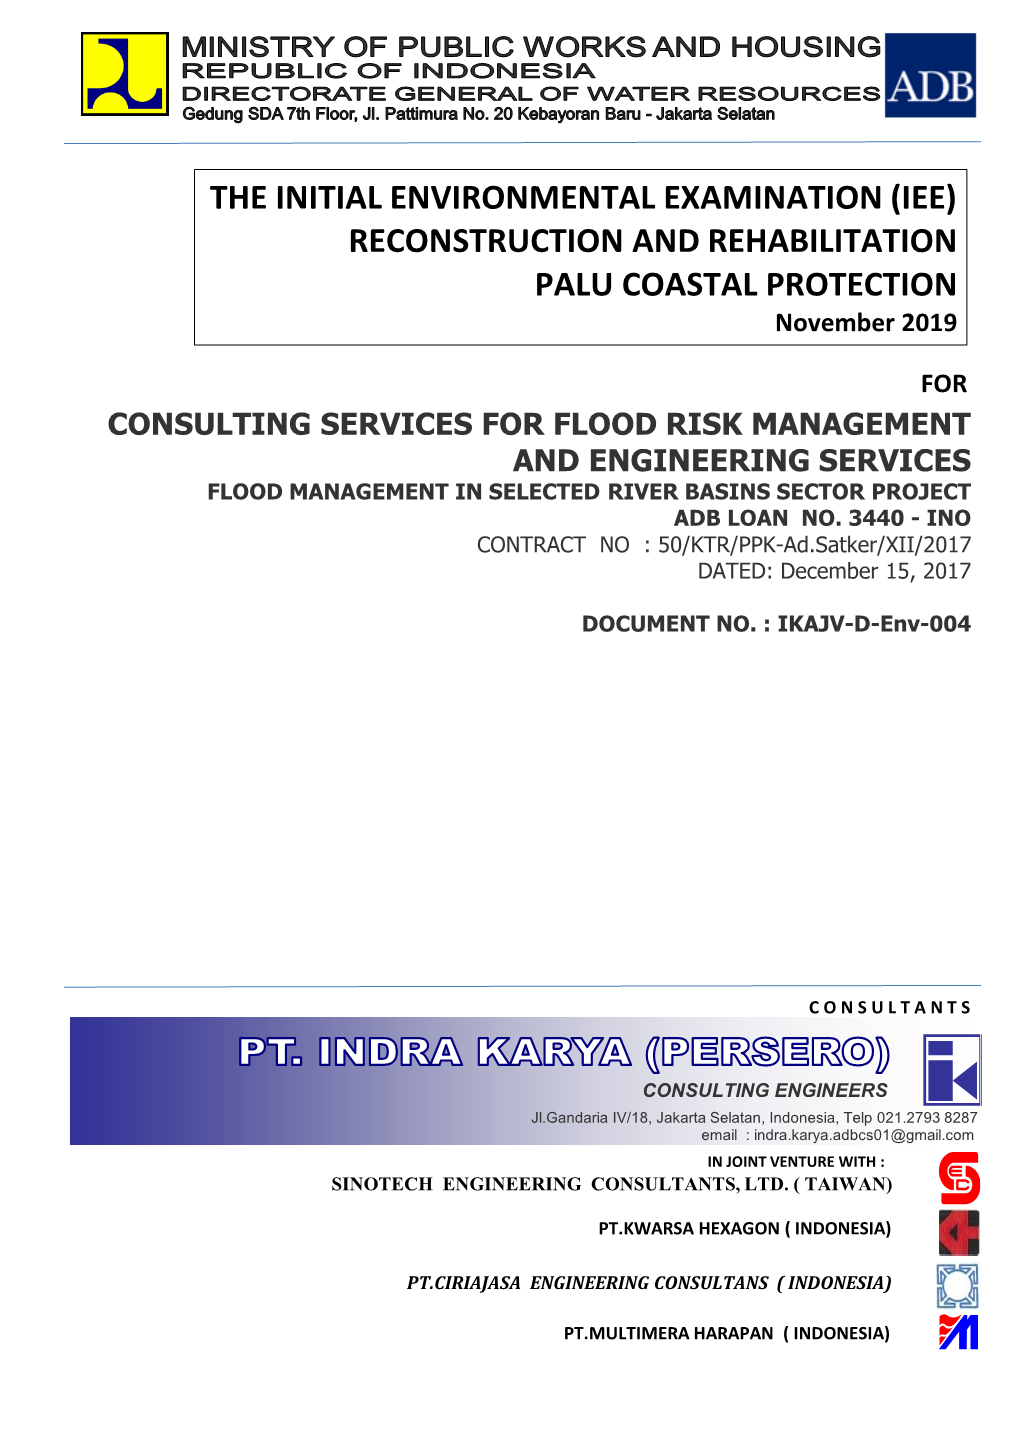 THE INITIAL ENVIRONMENTAL EXAMINATION (IEE) RECONSTRUCTION and REHABILITATION PALU COASTAL PROTECTION November 2019